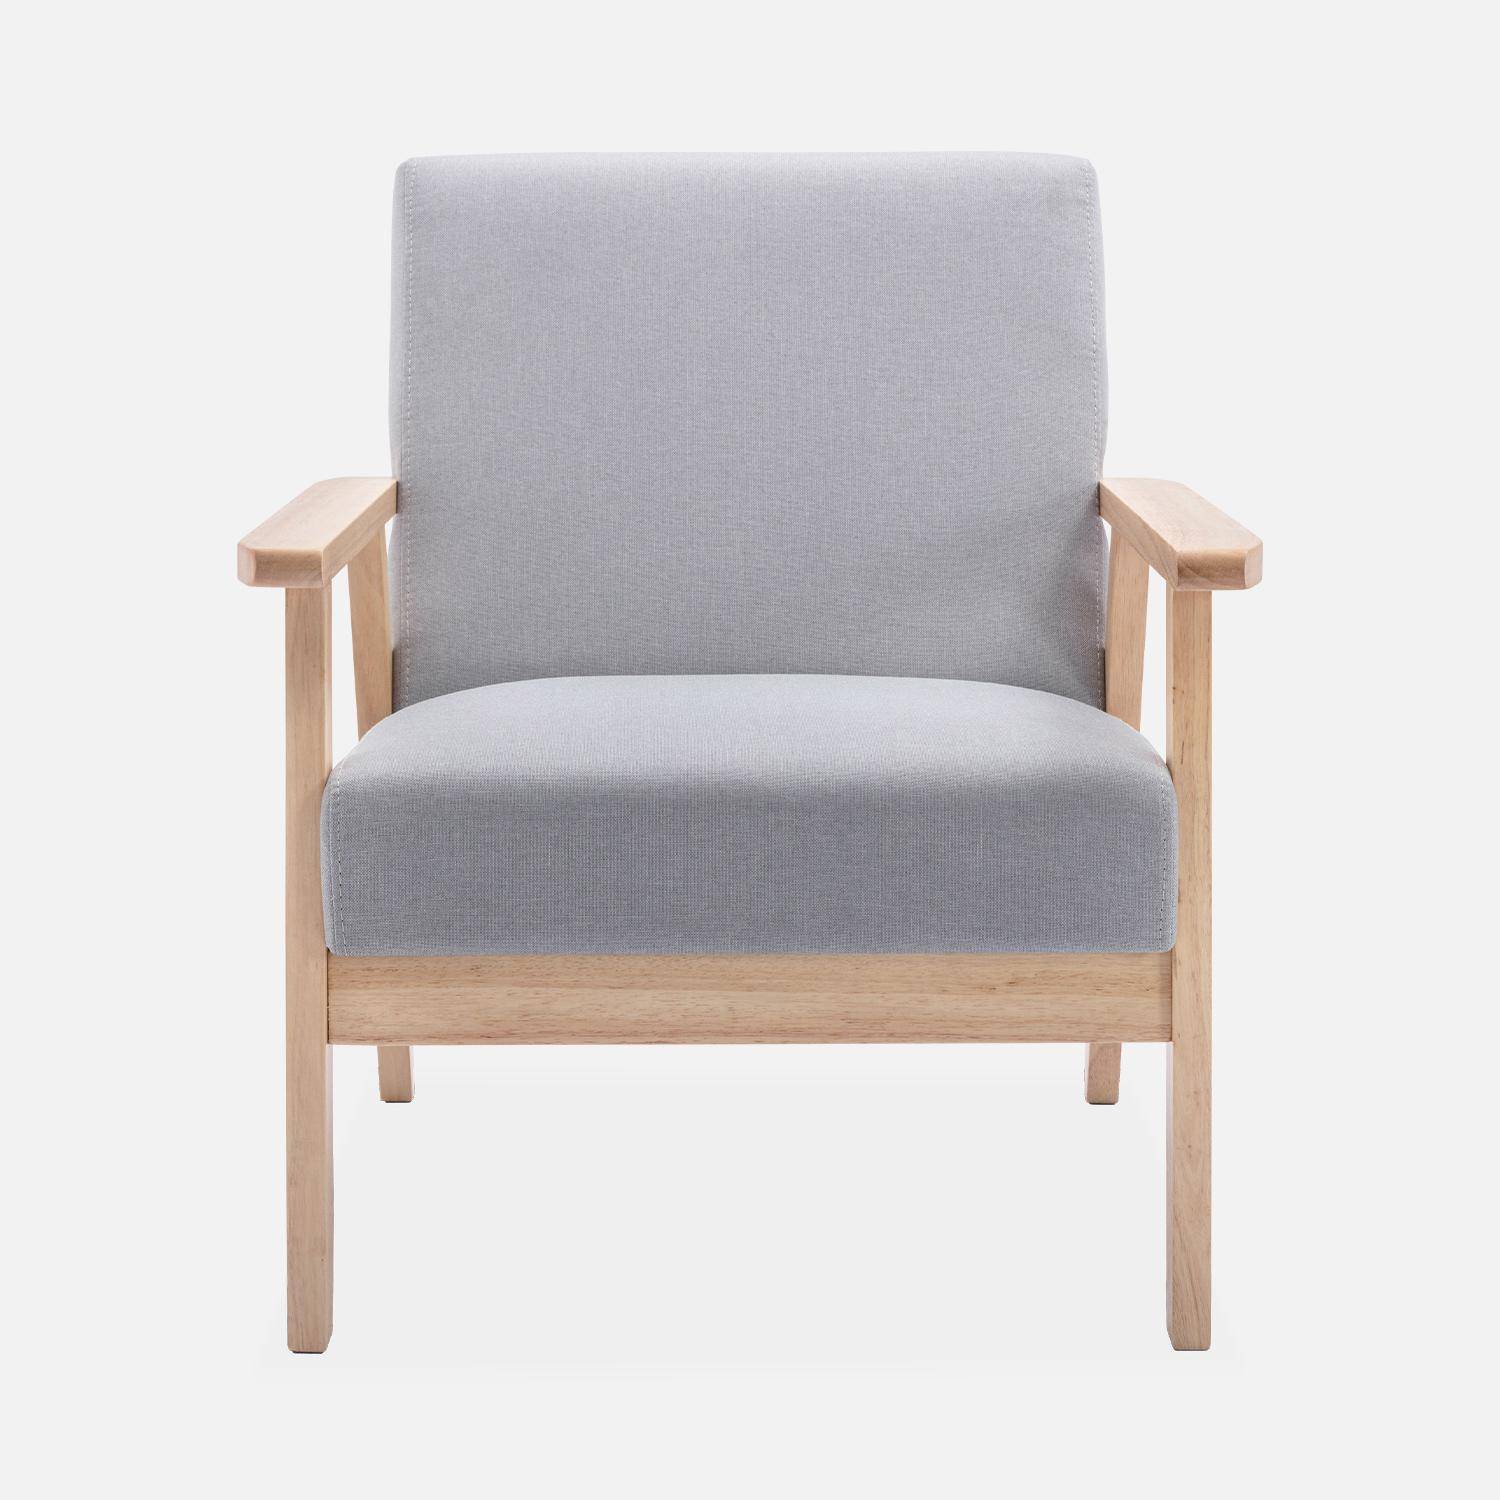 Banco y sillón de madera y tela gris claro, Isak, L 114 x A 69,5 x A 73 cm,sweeek,Photo5